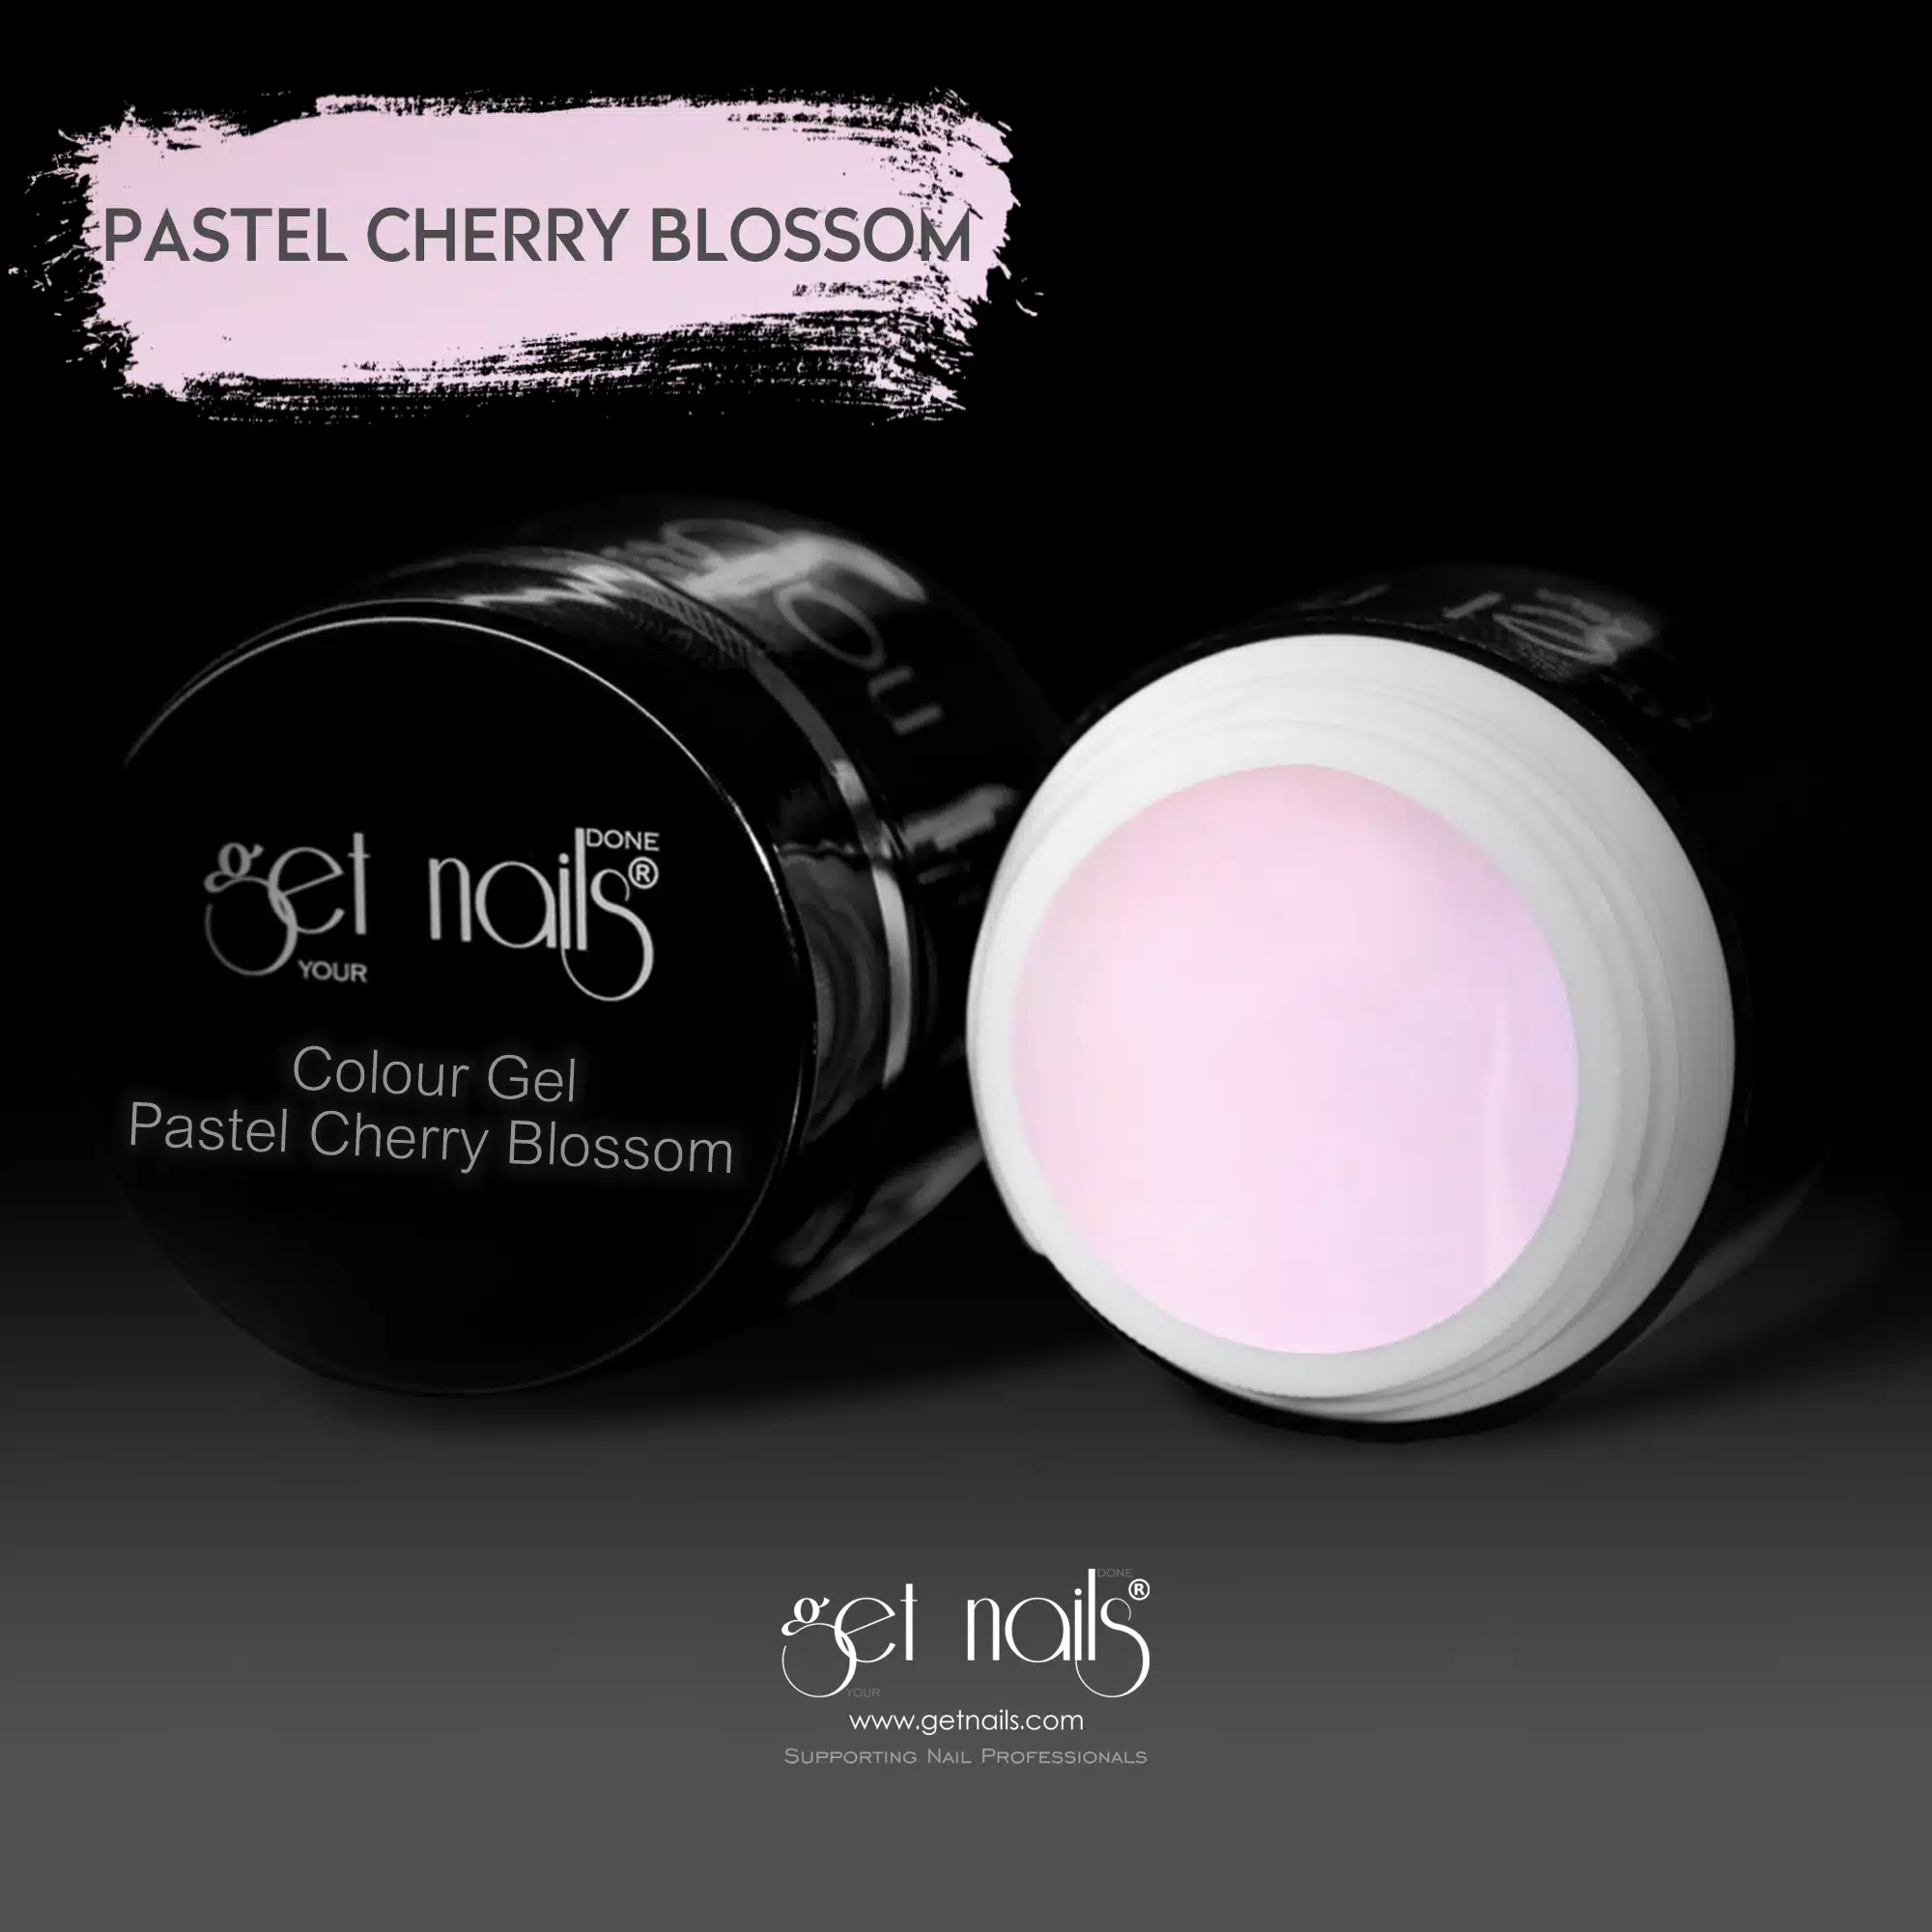 Get Nails Austria - Gel colorato Pastel Cherry Blossom 5g